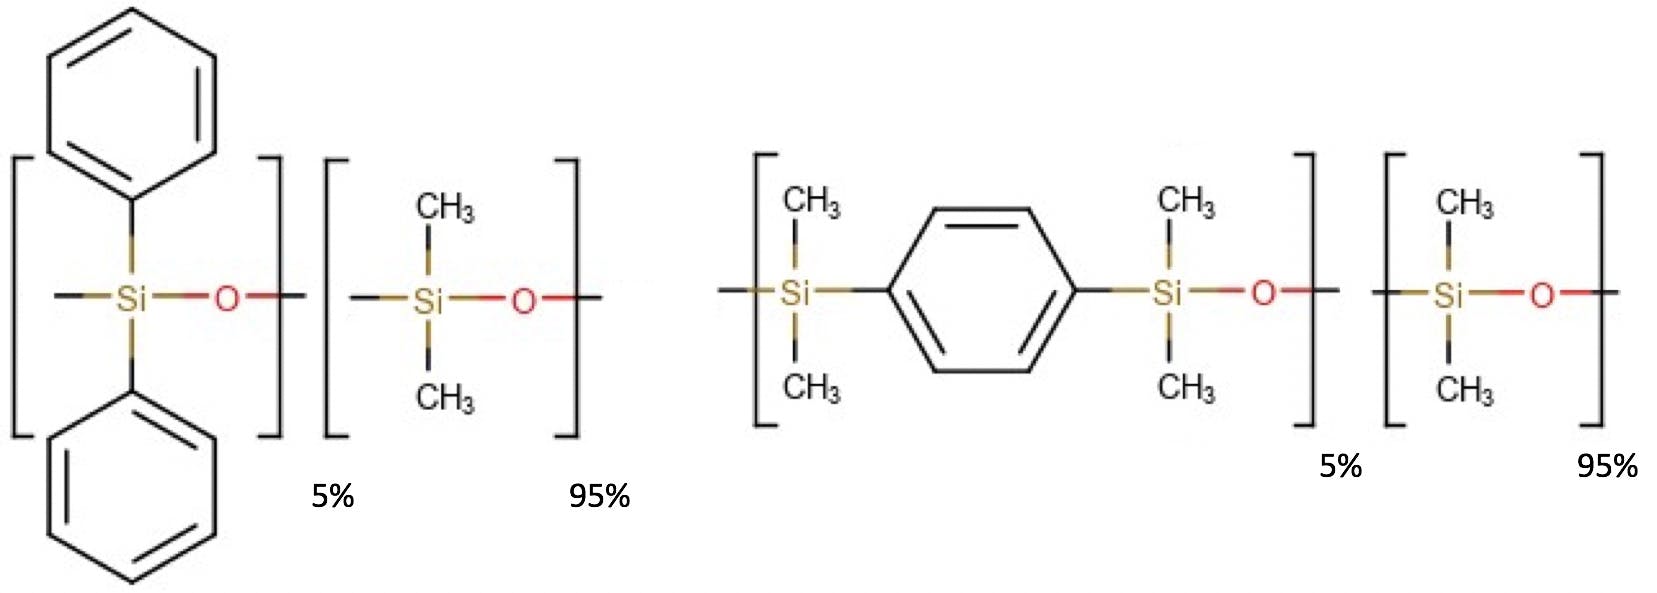 Monomeric units of the pendant and silphylene versions of a 5% Phenyl Poldimethyl siloxane GC stationary phase